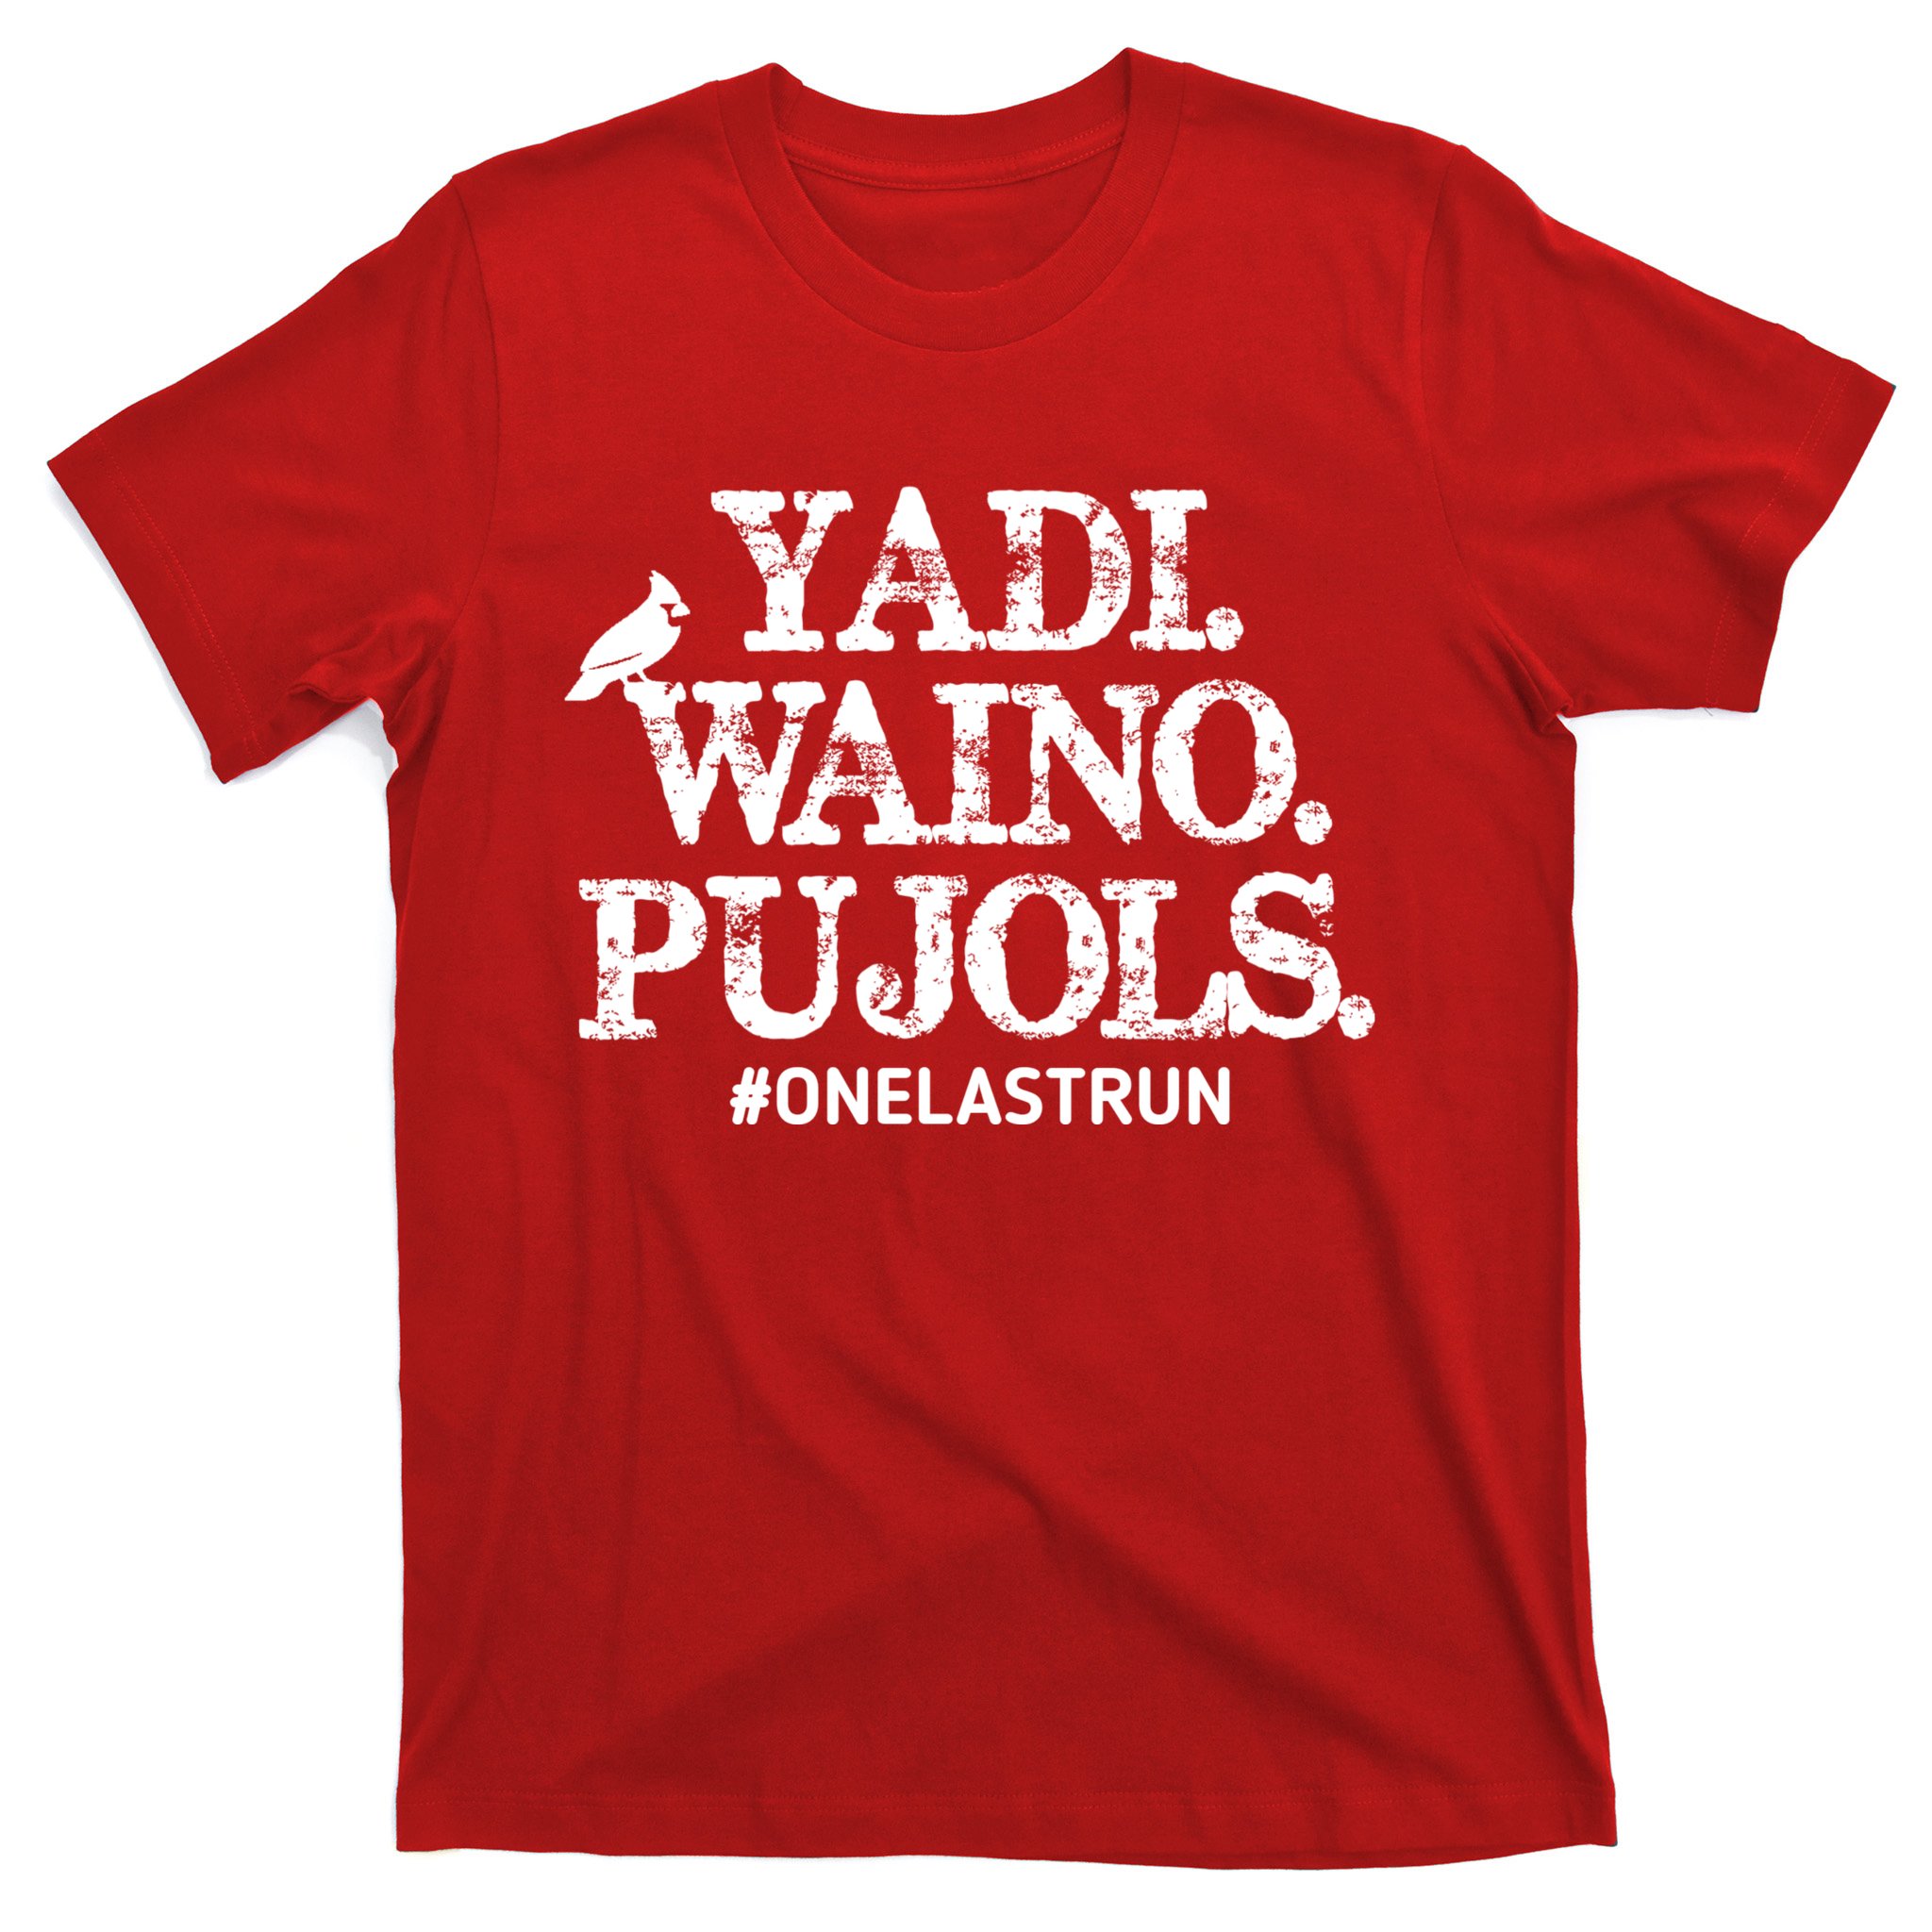 Yadi Waino Pujols Funny Essential T-Shirt for Sale by